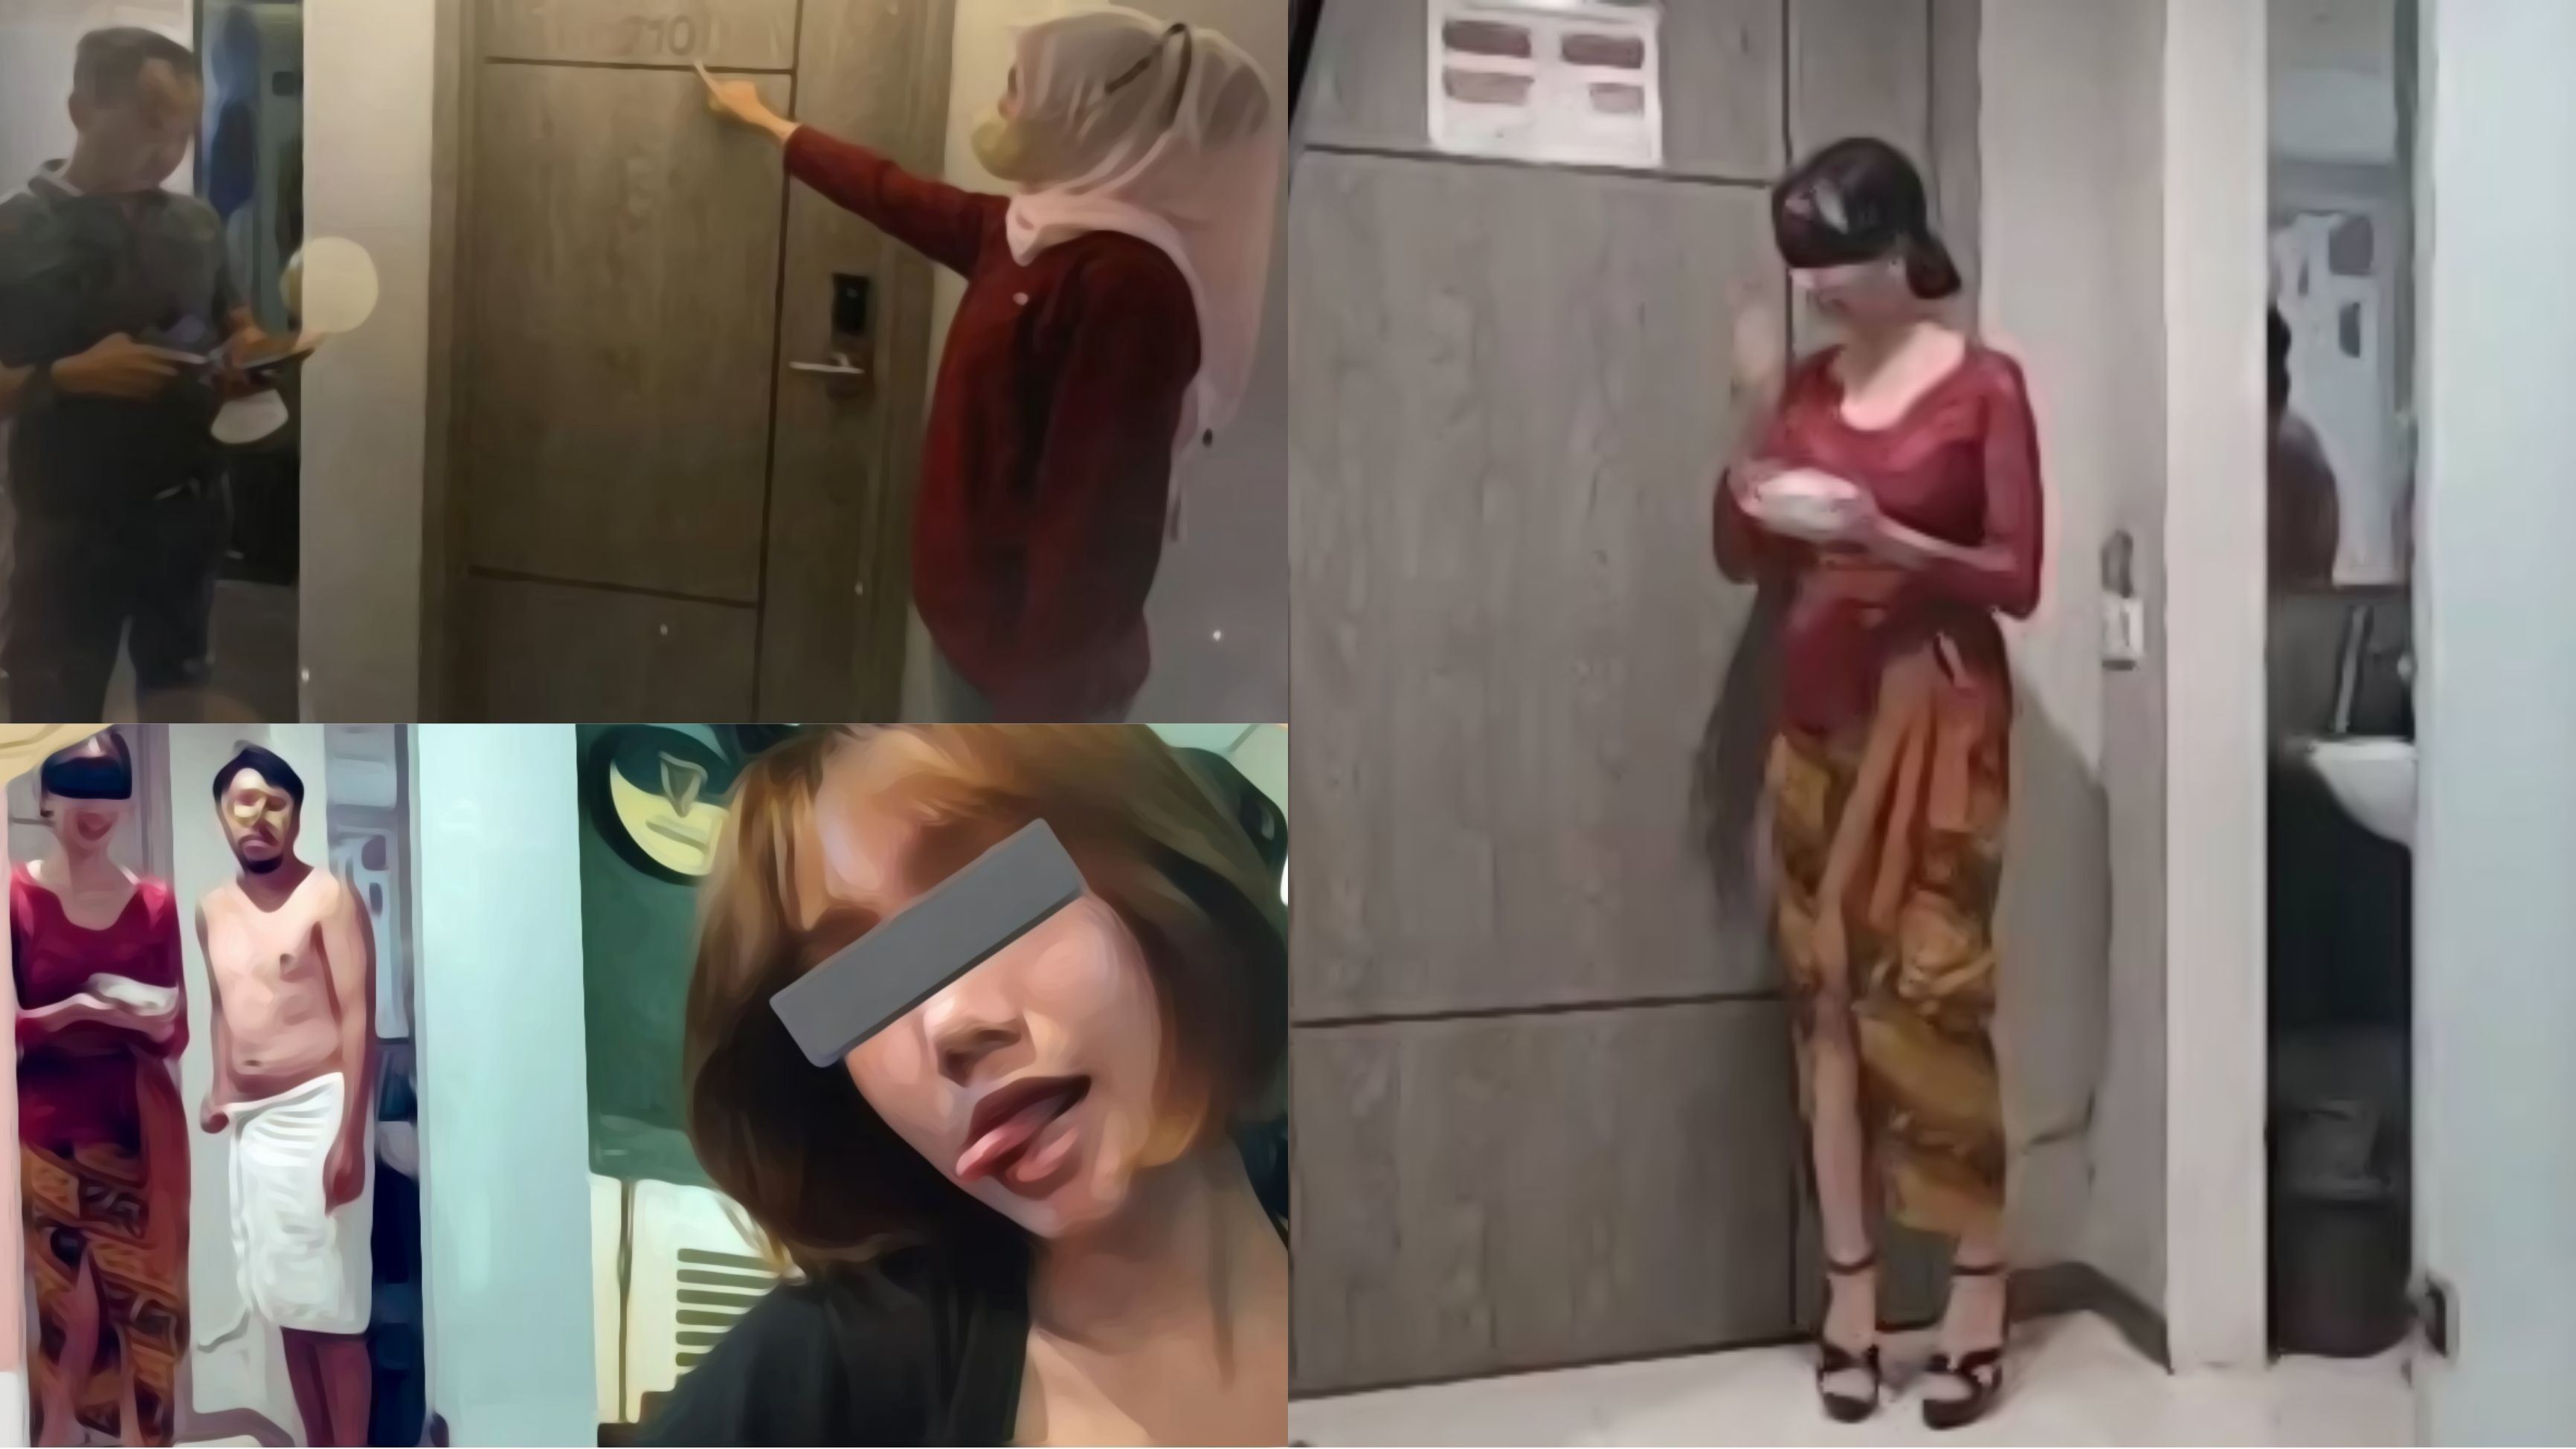 Bukan staf hotel, mengapa wanita pemeran video syur di sebuah hotel di Surabaya pakai kebaya merah? Teka-teki akhirnya terjawab.